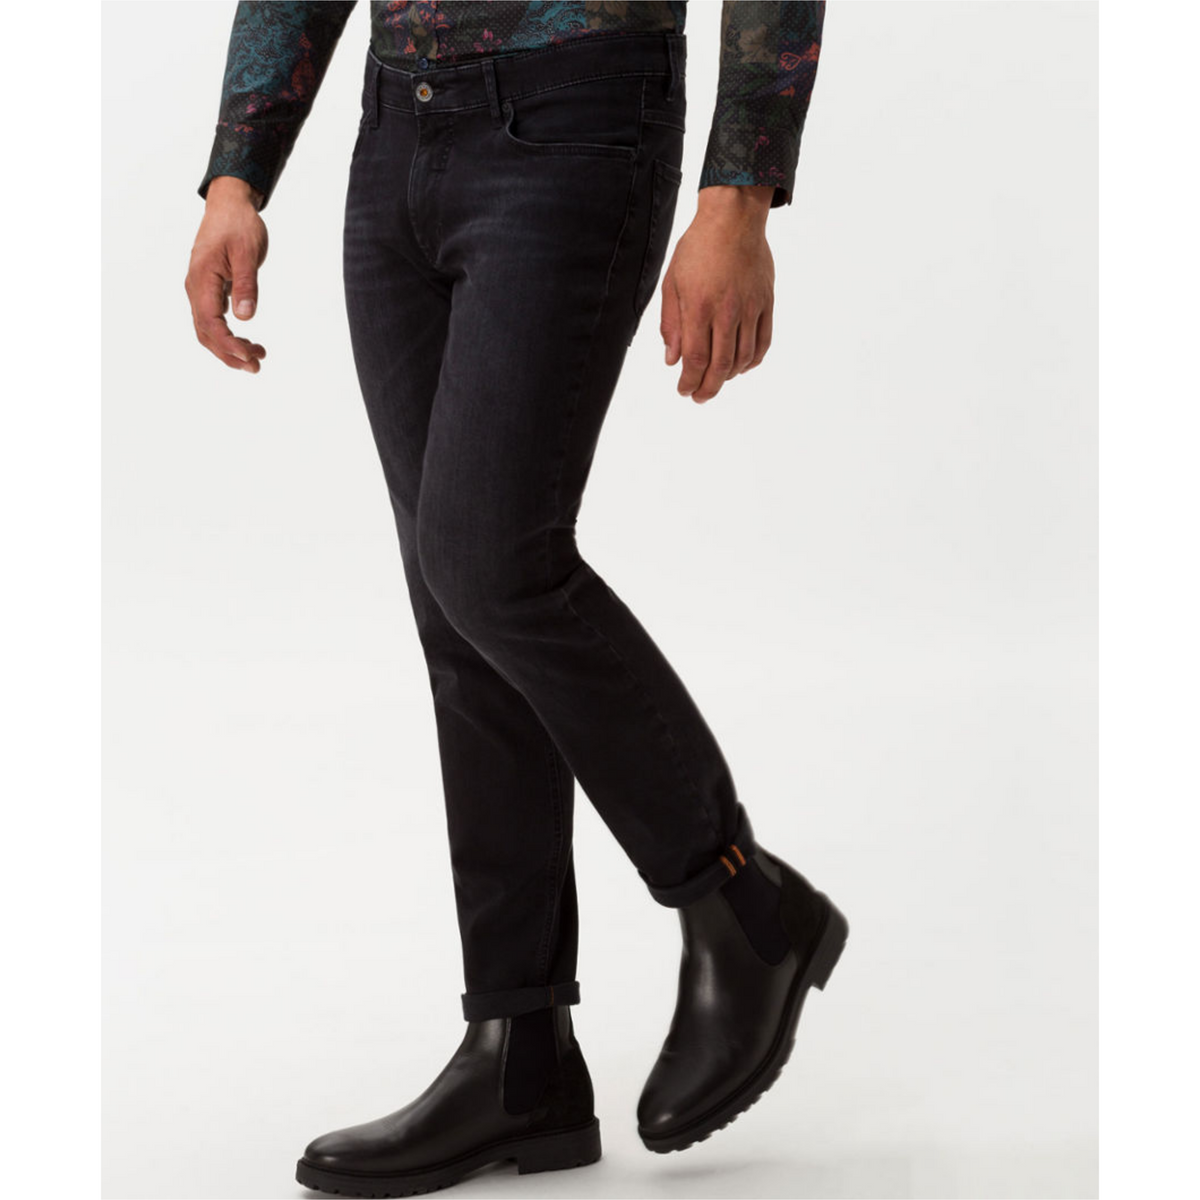 Brax Five-pocket Jeans Slim Jepsons fit Super 85-6307 C– Boosted Denim Stretchy